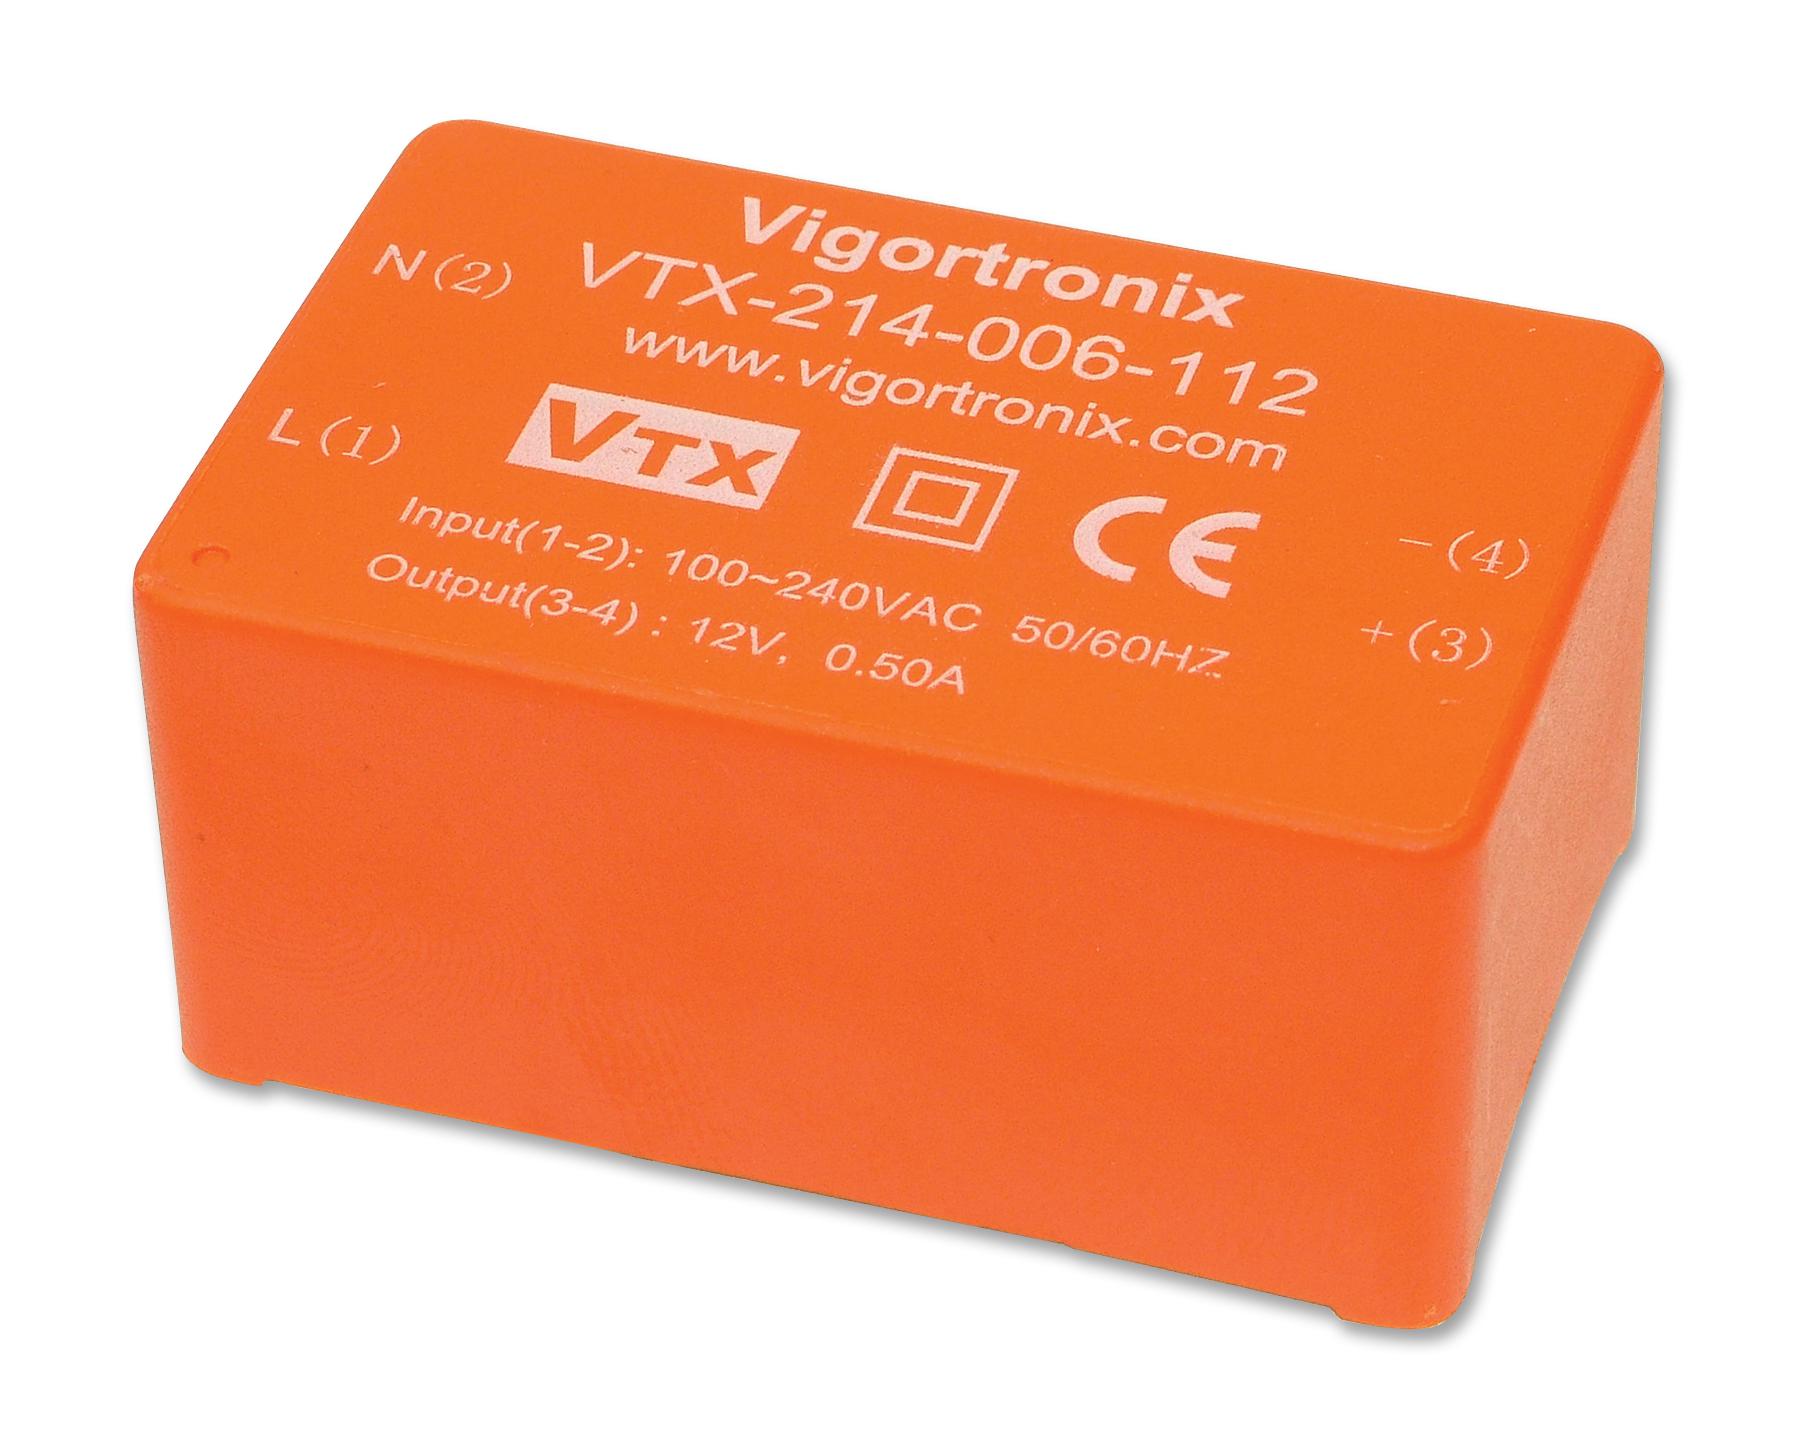 VTX-214-006-124 POWER SUPPLY, AC-DC, 24V, 0.25A VIGORTRONIX